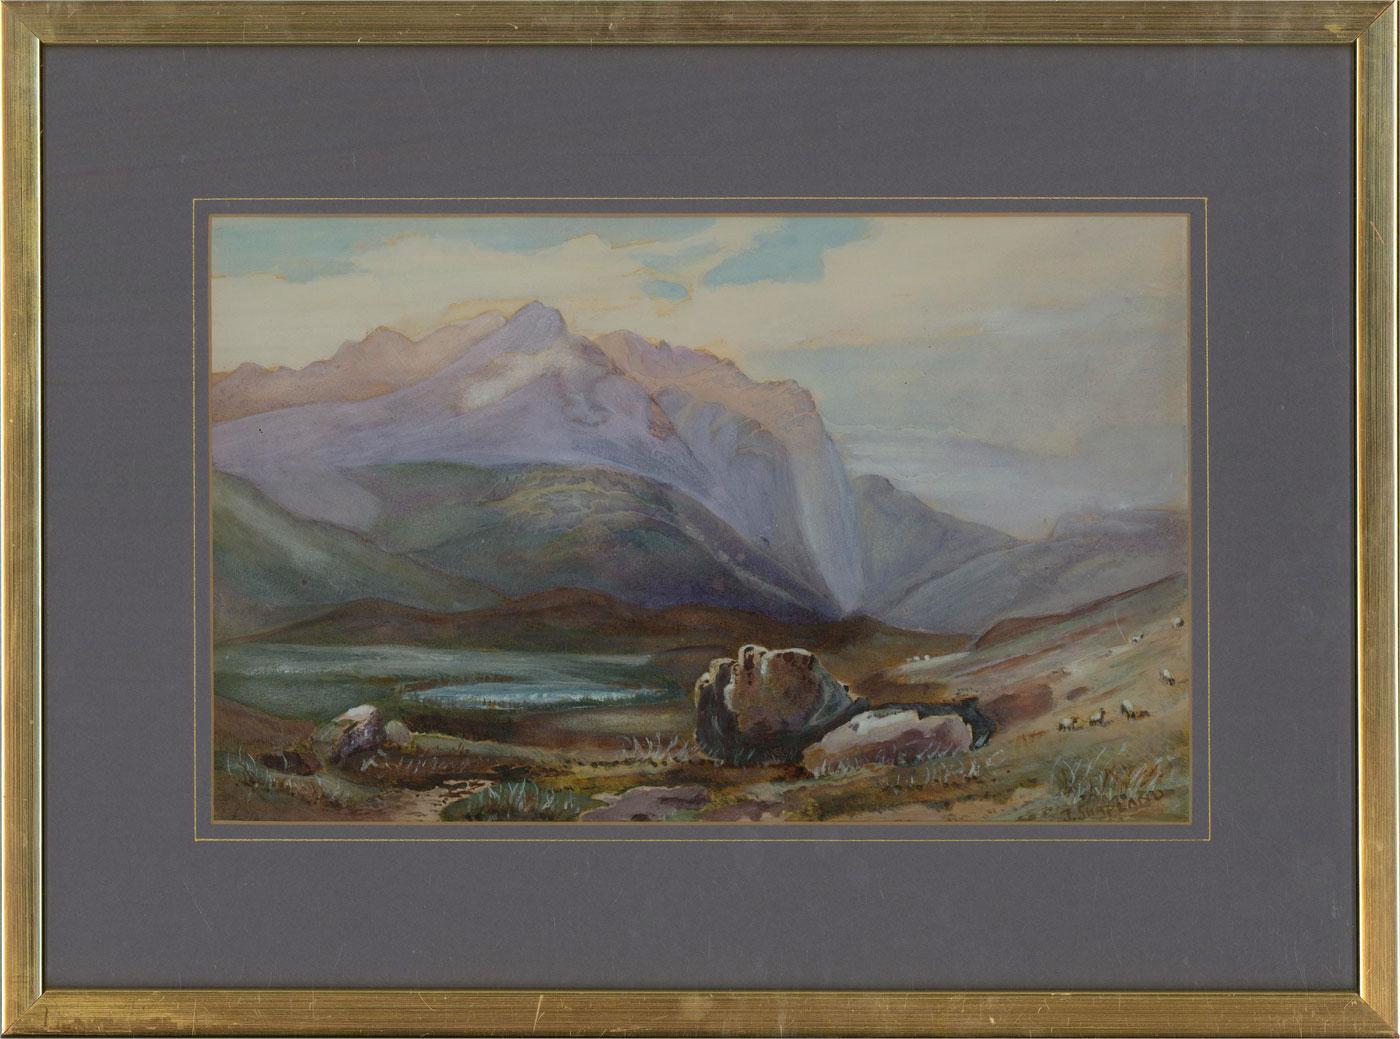 John Shapland (1865-1929) - Late 19th Century Watercolour, Mountain Range